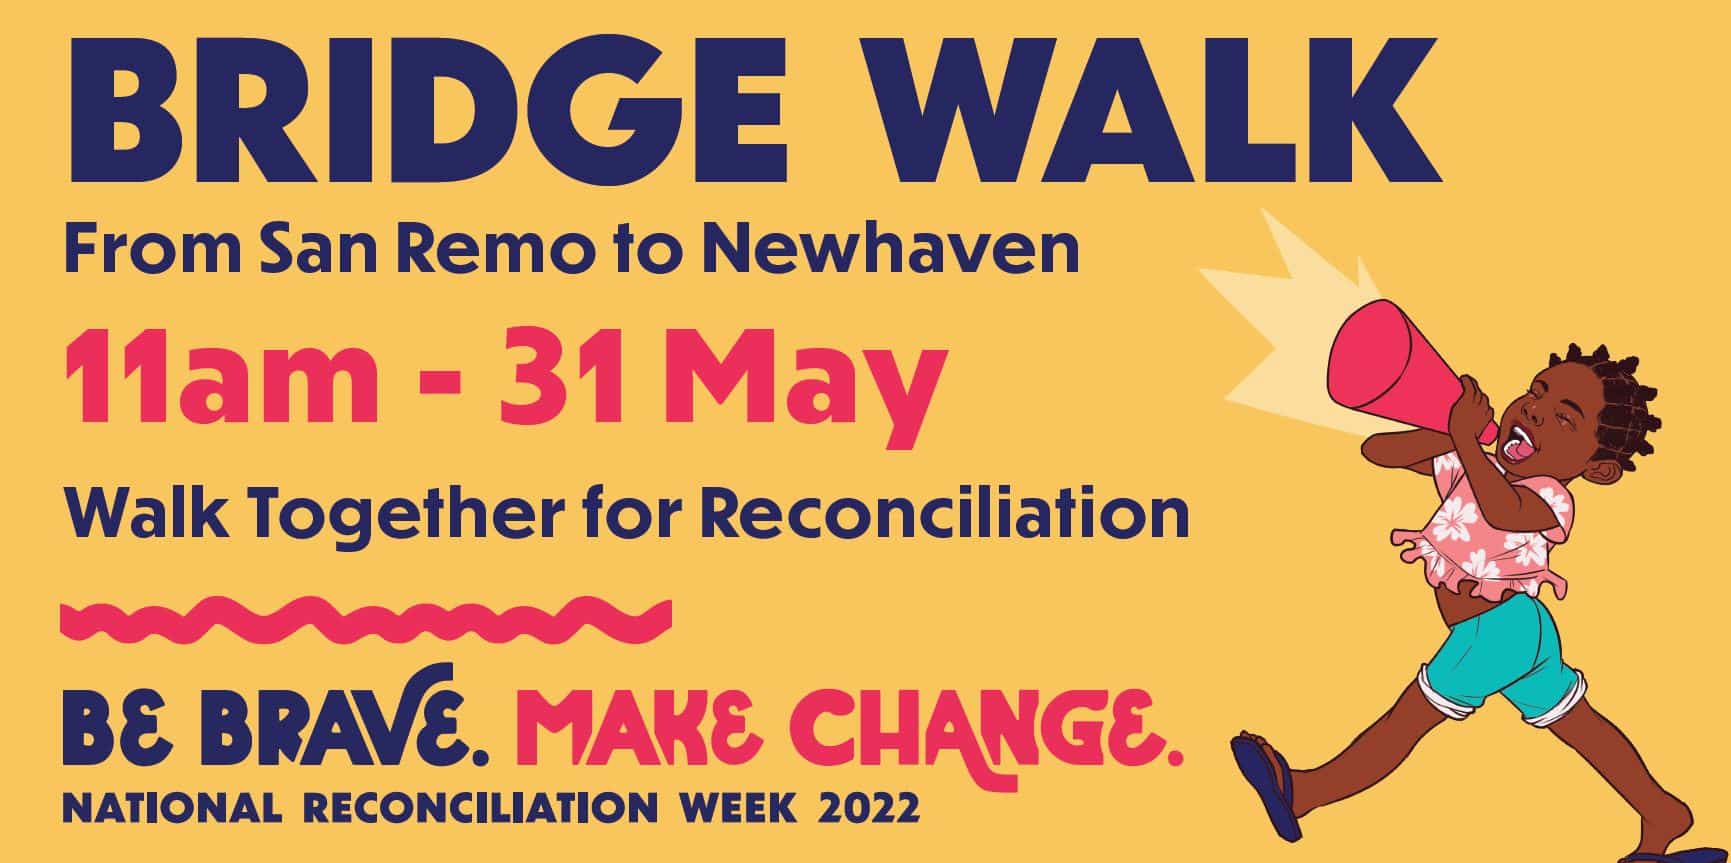 Bridge Walk National Reconciliation Week